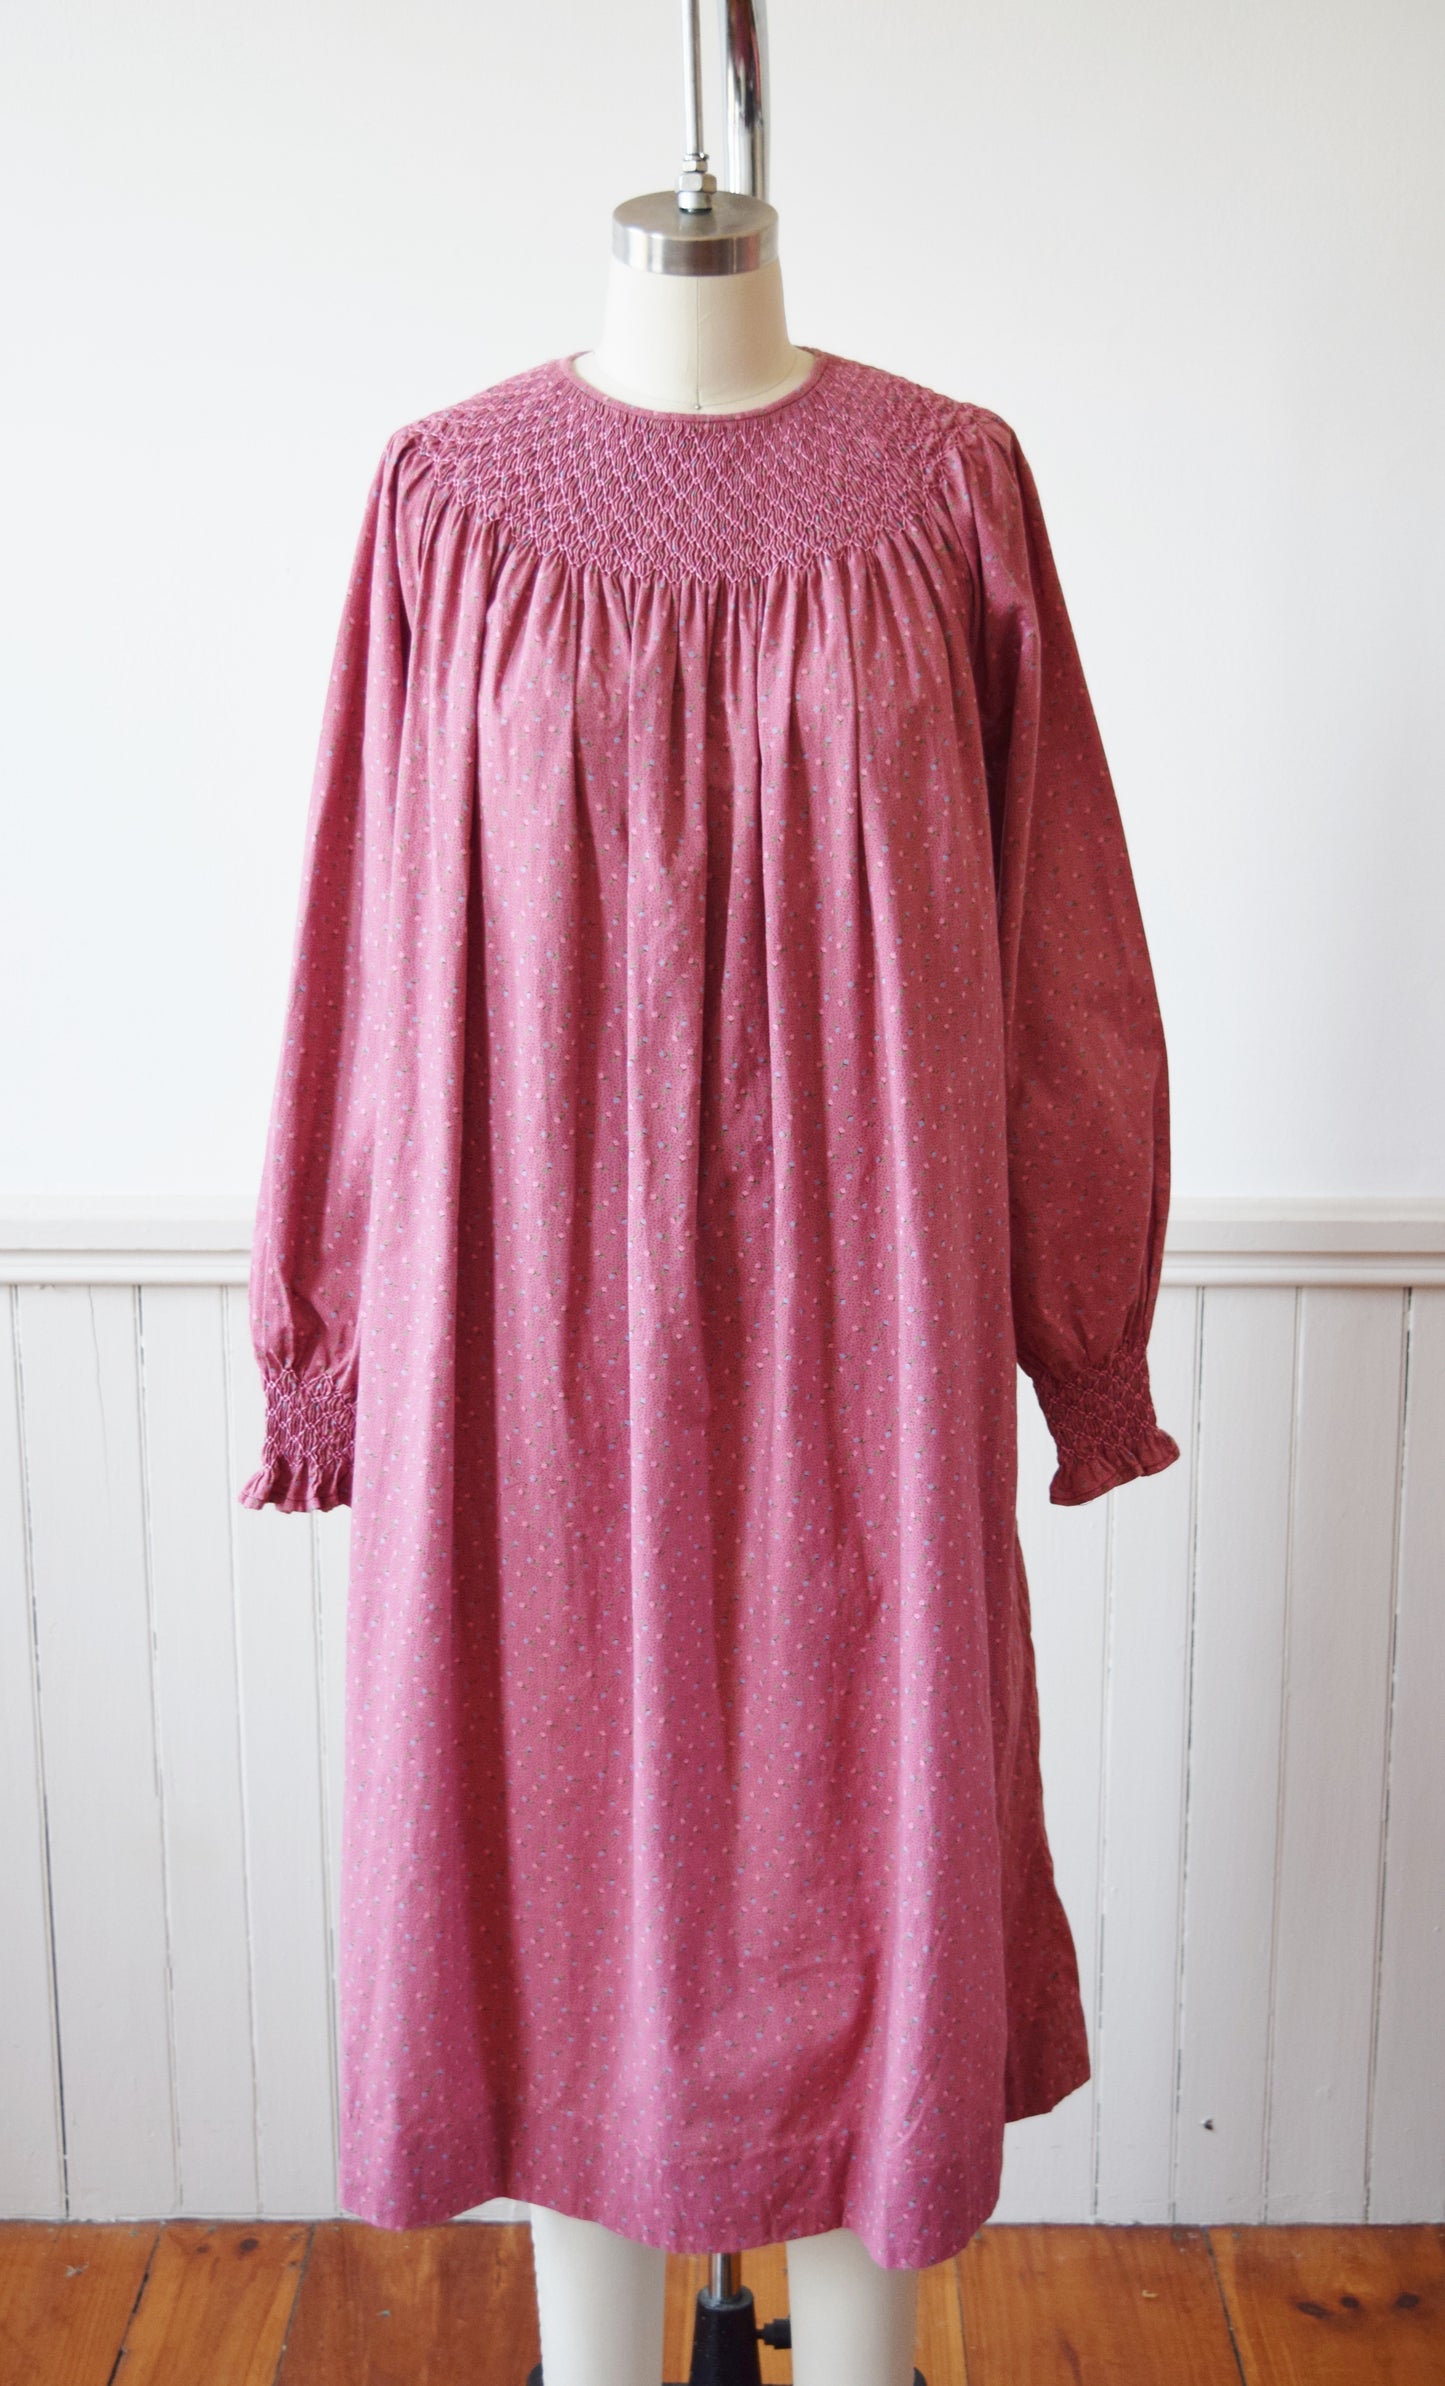 Smocked Prairie Revival Dress | 1970s/80s | S